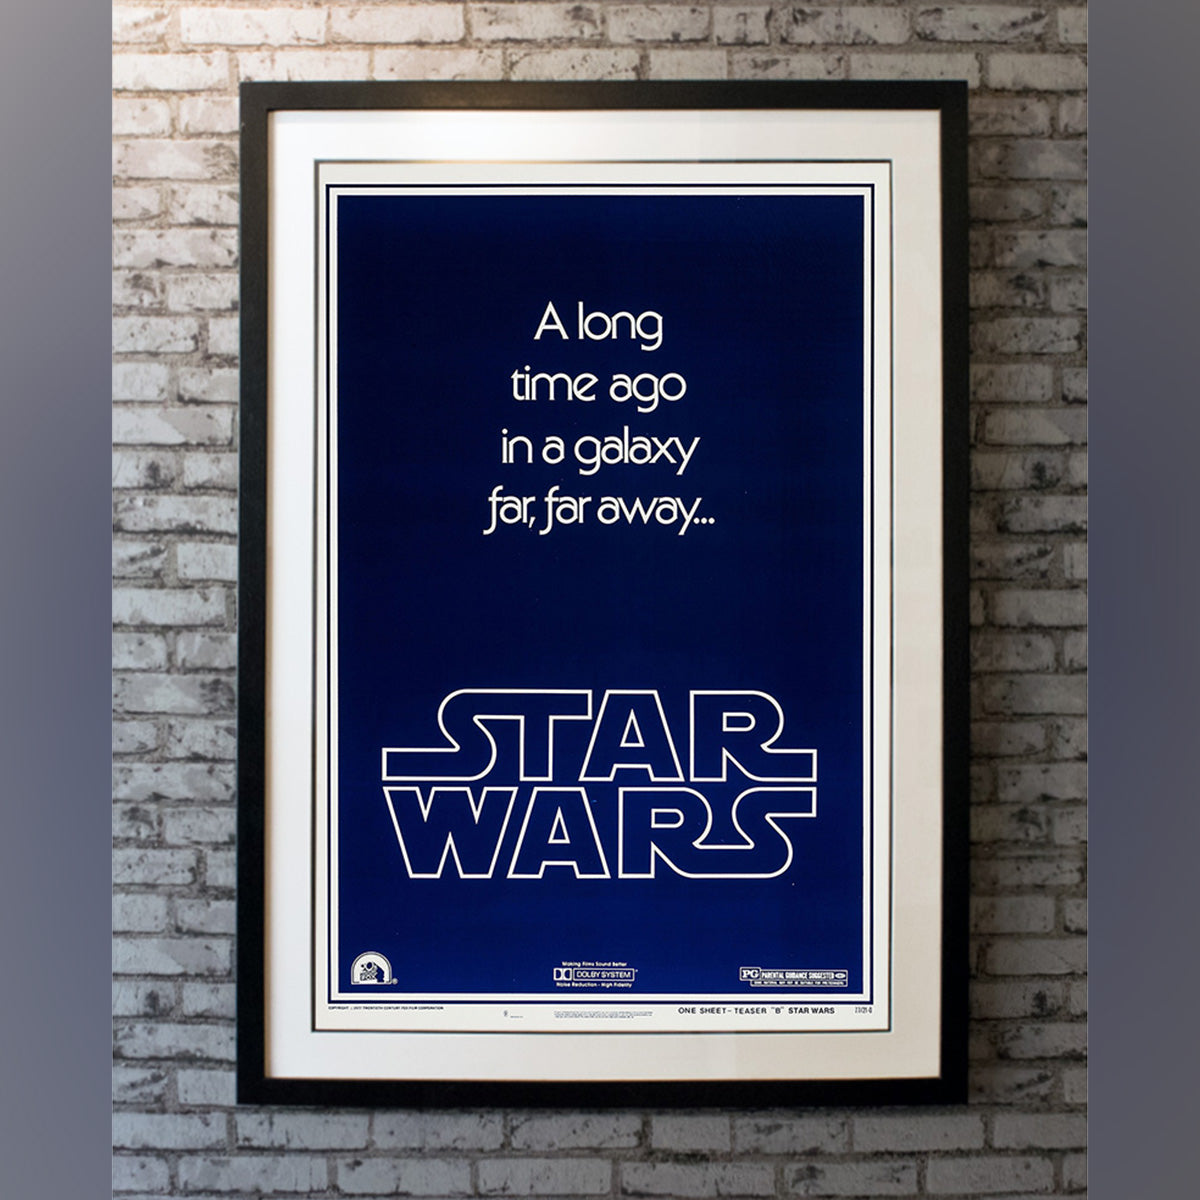 Original Movie Poster of Star Wars (1977)